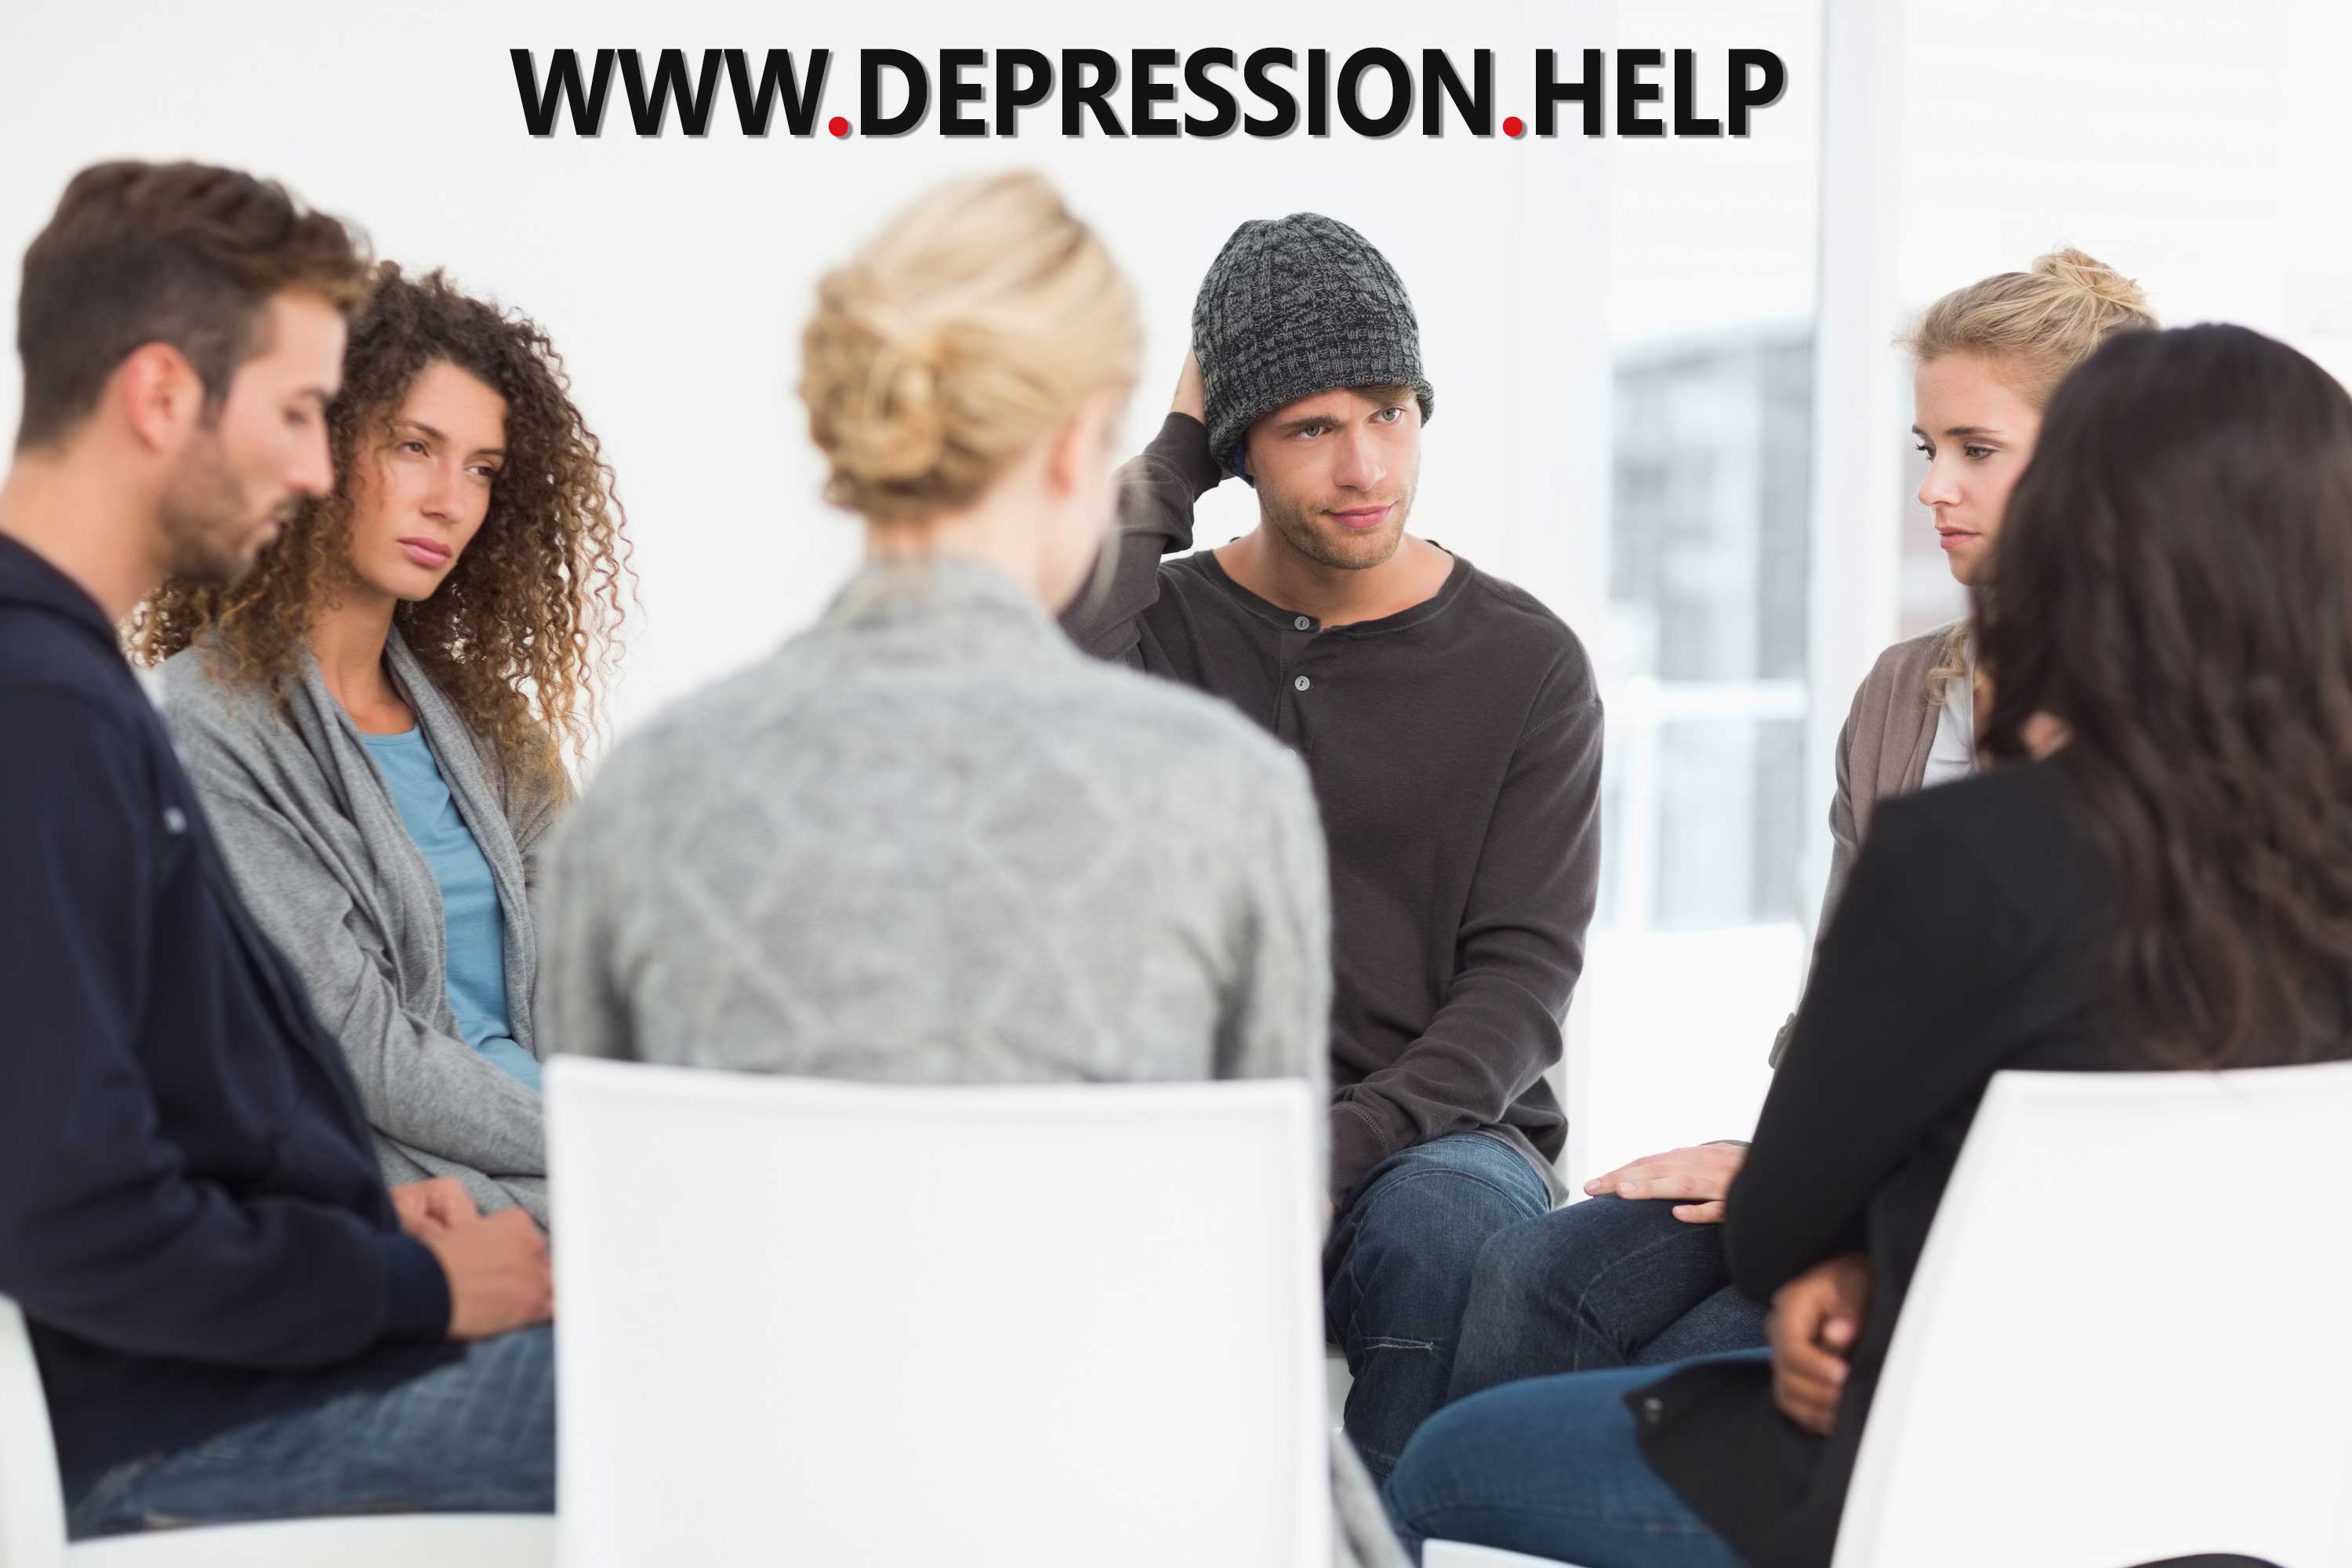 Central Minnesota Mental Health Ctr - Depression Treatment Facility